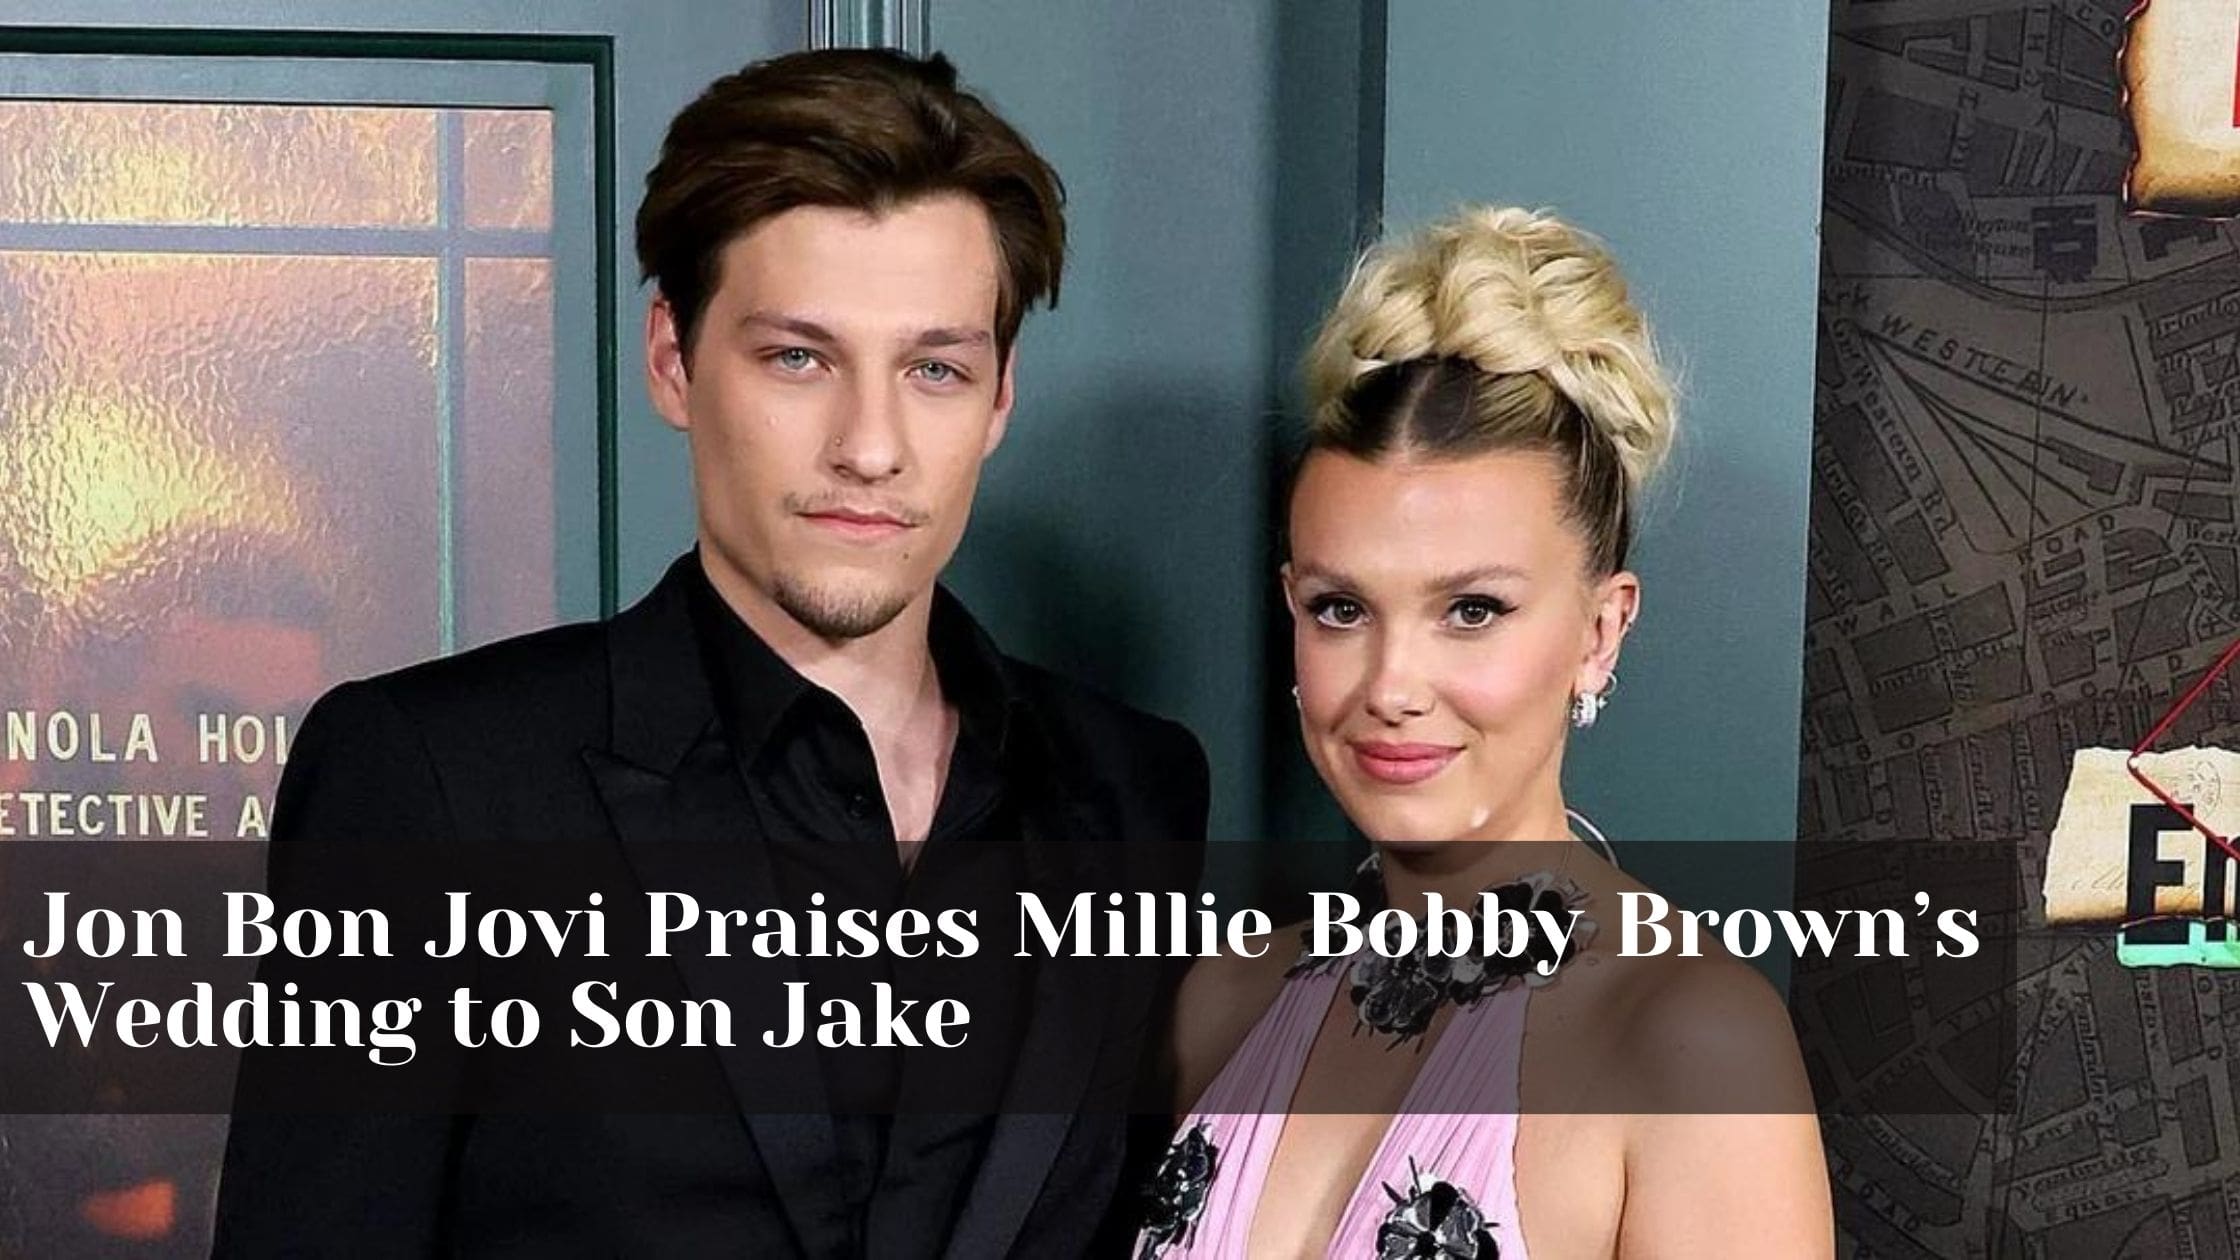 Jon Bon Jovi Praises Millie Bobby Brown’s Wedding to Son Jake